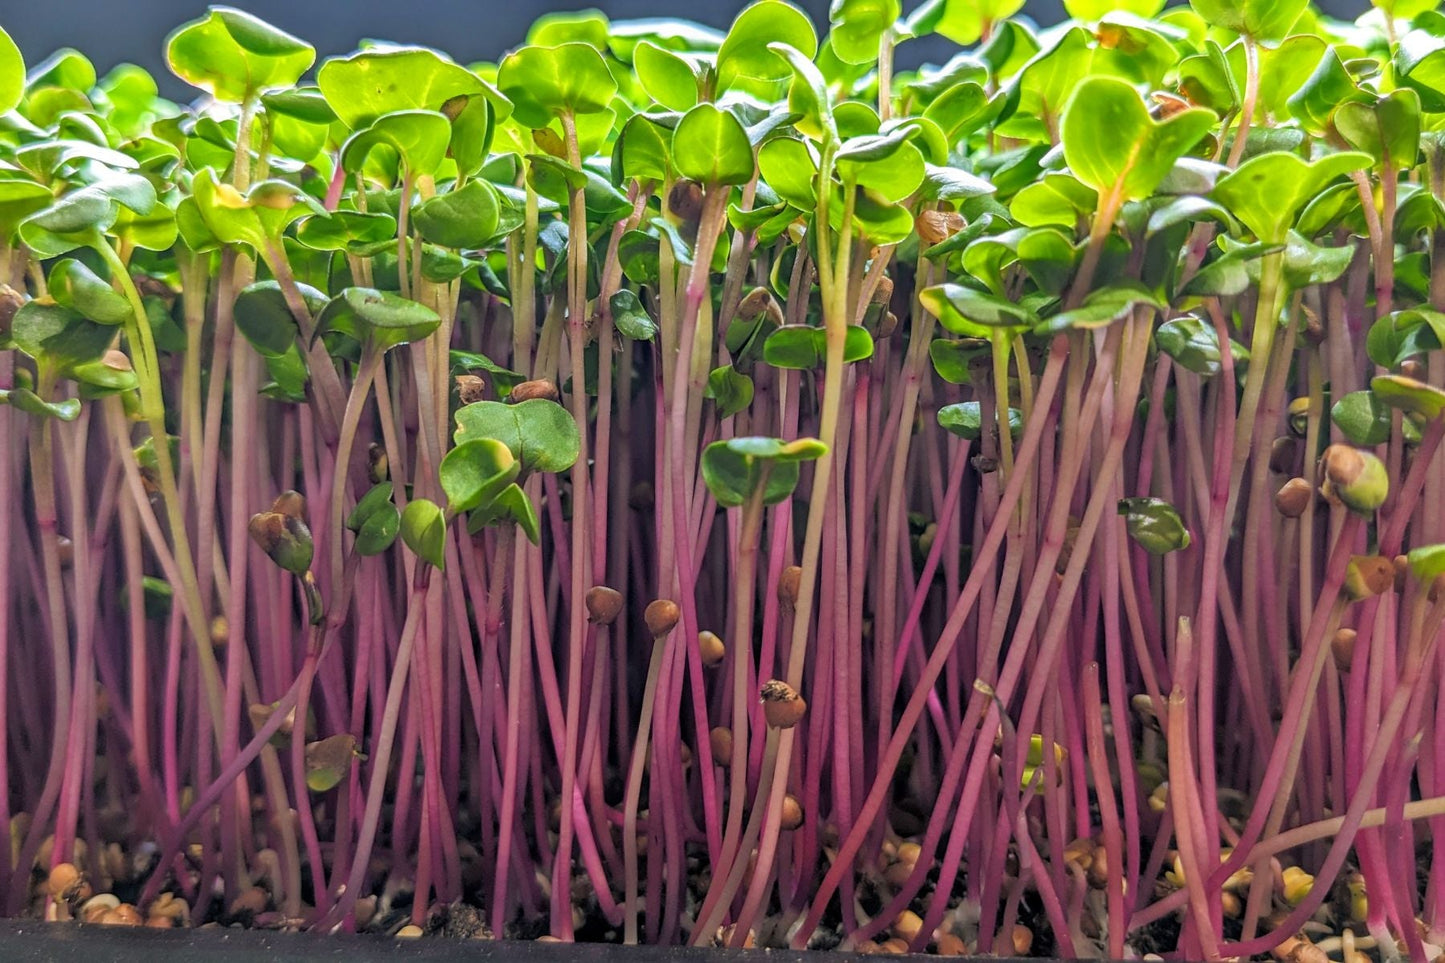 A closeup photo of radish microgreens